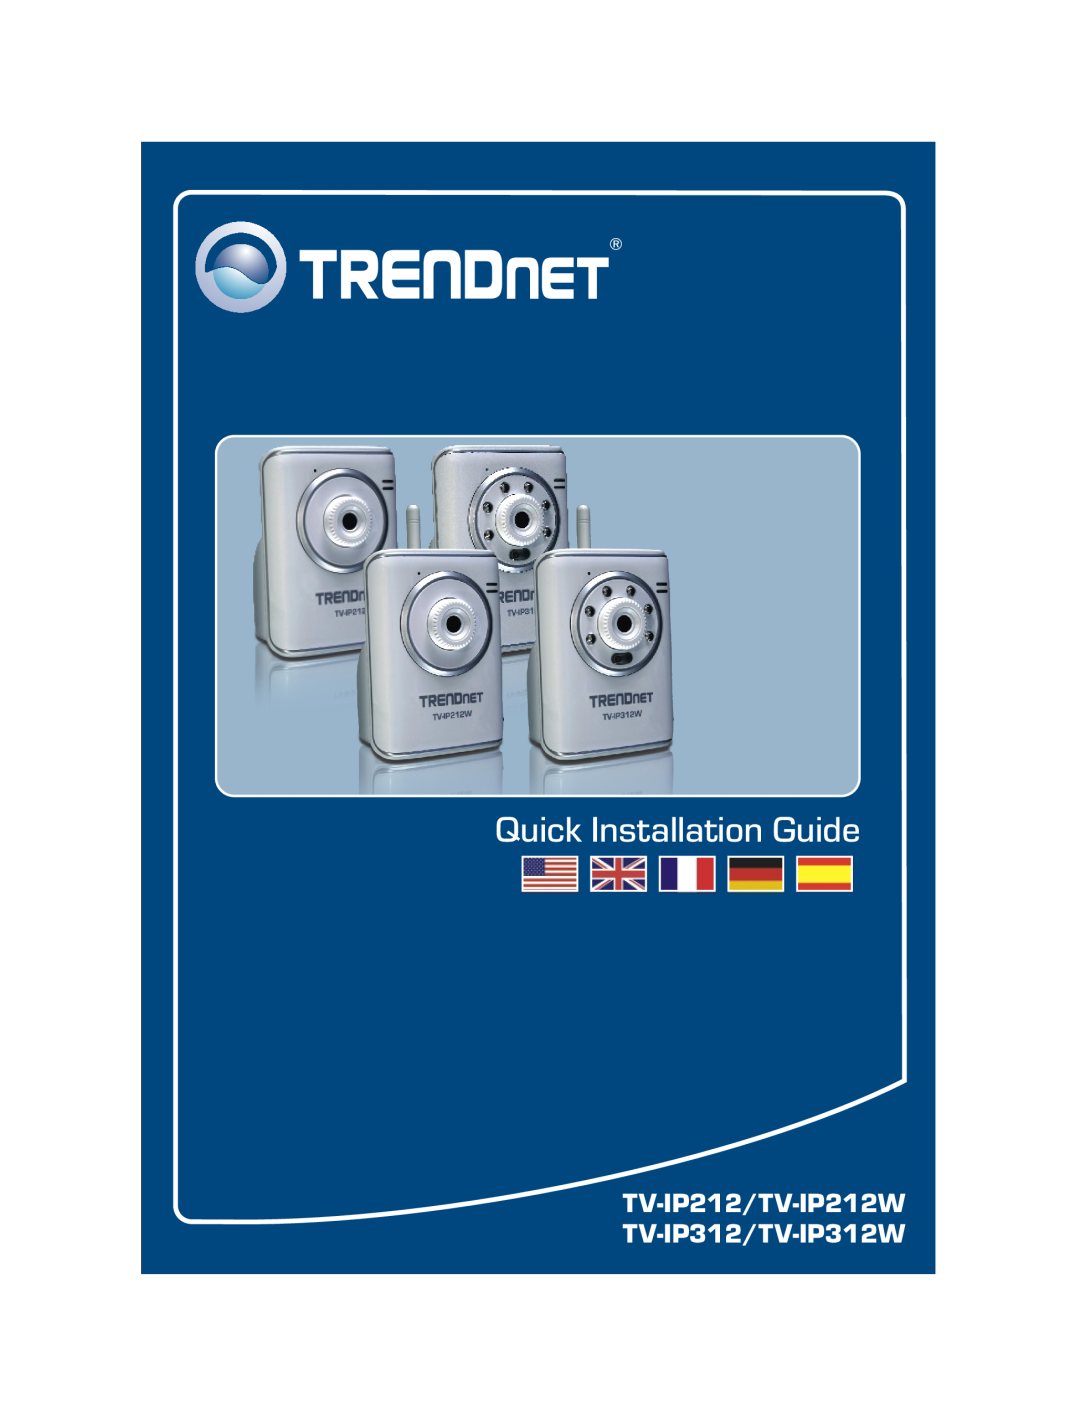 TRENDnet manual Quick Installation Guide, TV-IP212/TV-IP212W TV-IP312/TV-IP312W 